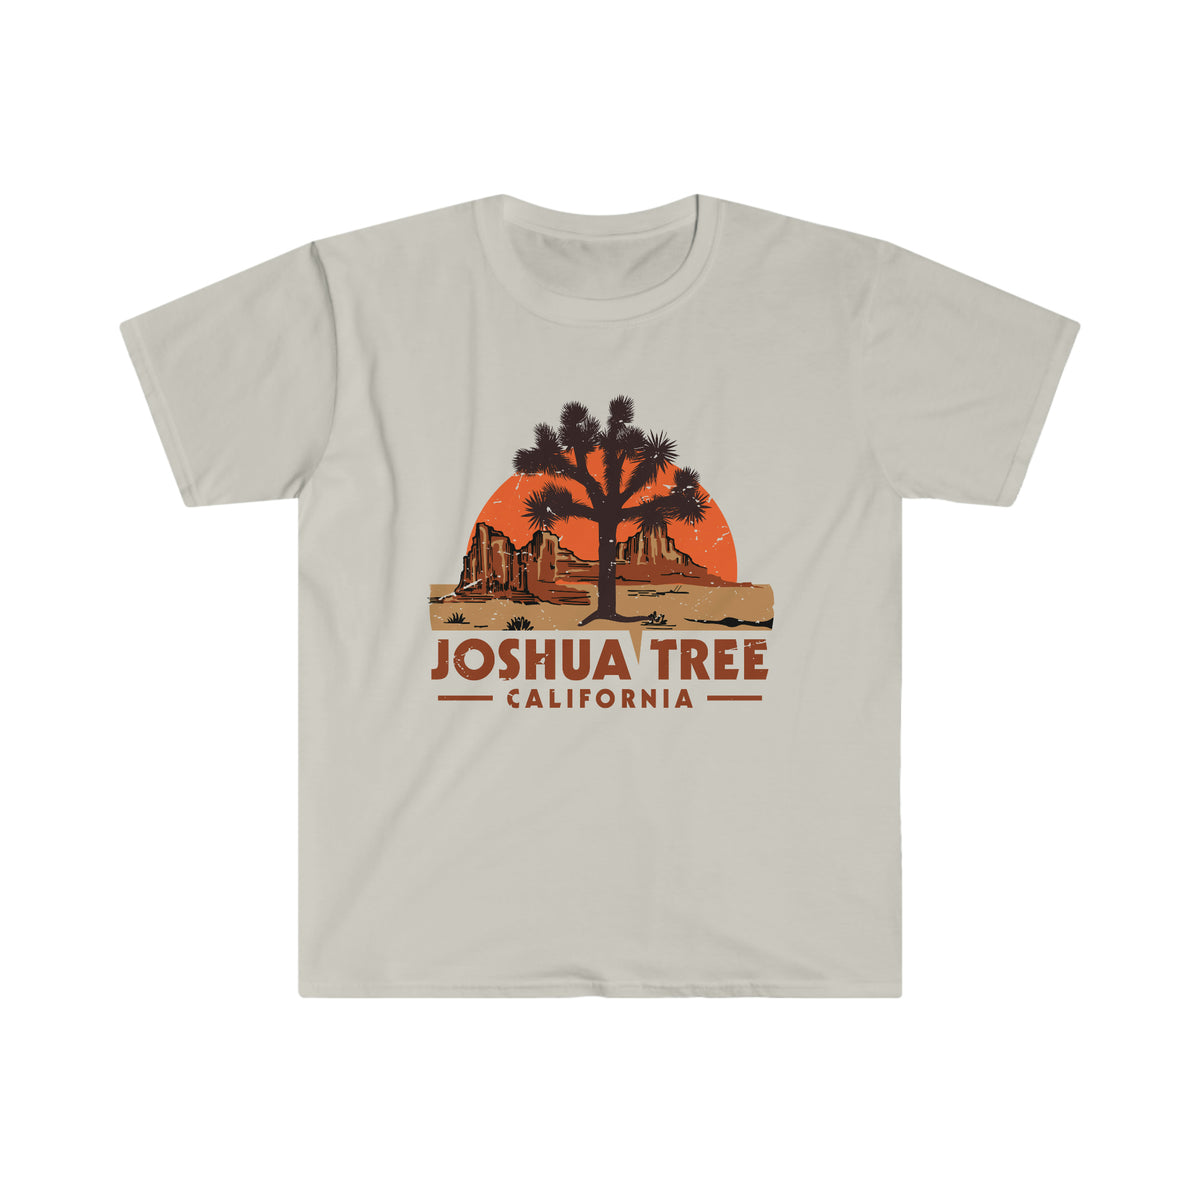 Joshua Tree California National Park Shirt | Outdoor Camping Shirt | Unisex Soft Style T-Shirt